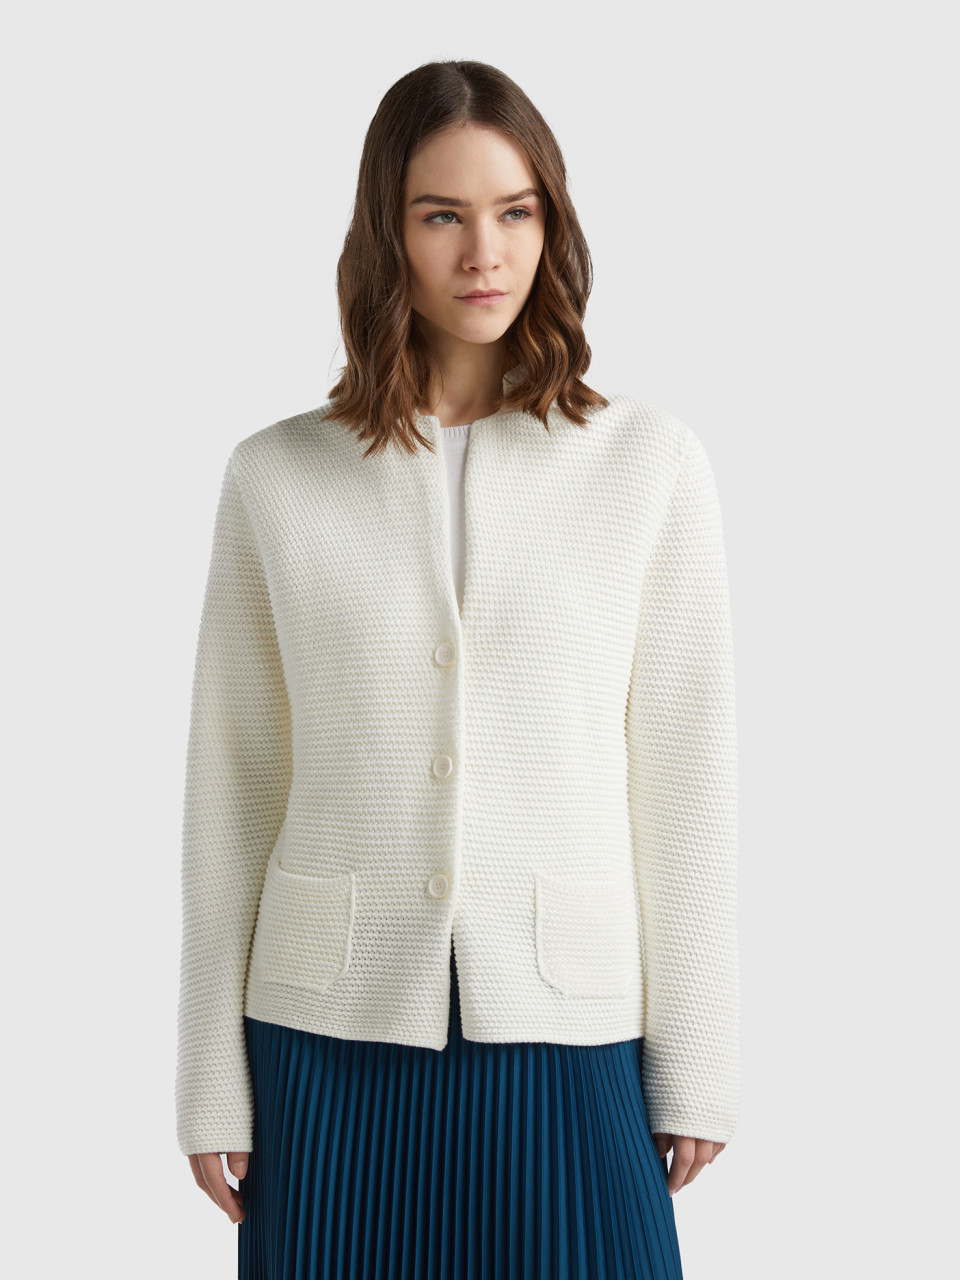 Benetton Online exclusive, 100% Cotton Knit Jacket, Creamy White, Women